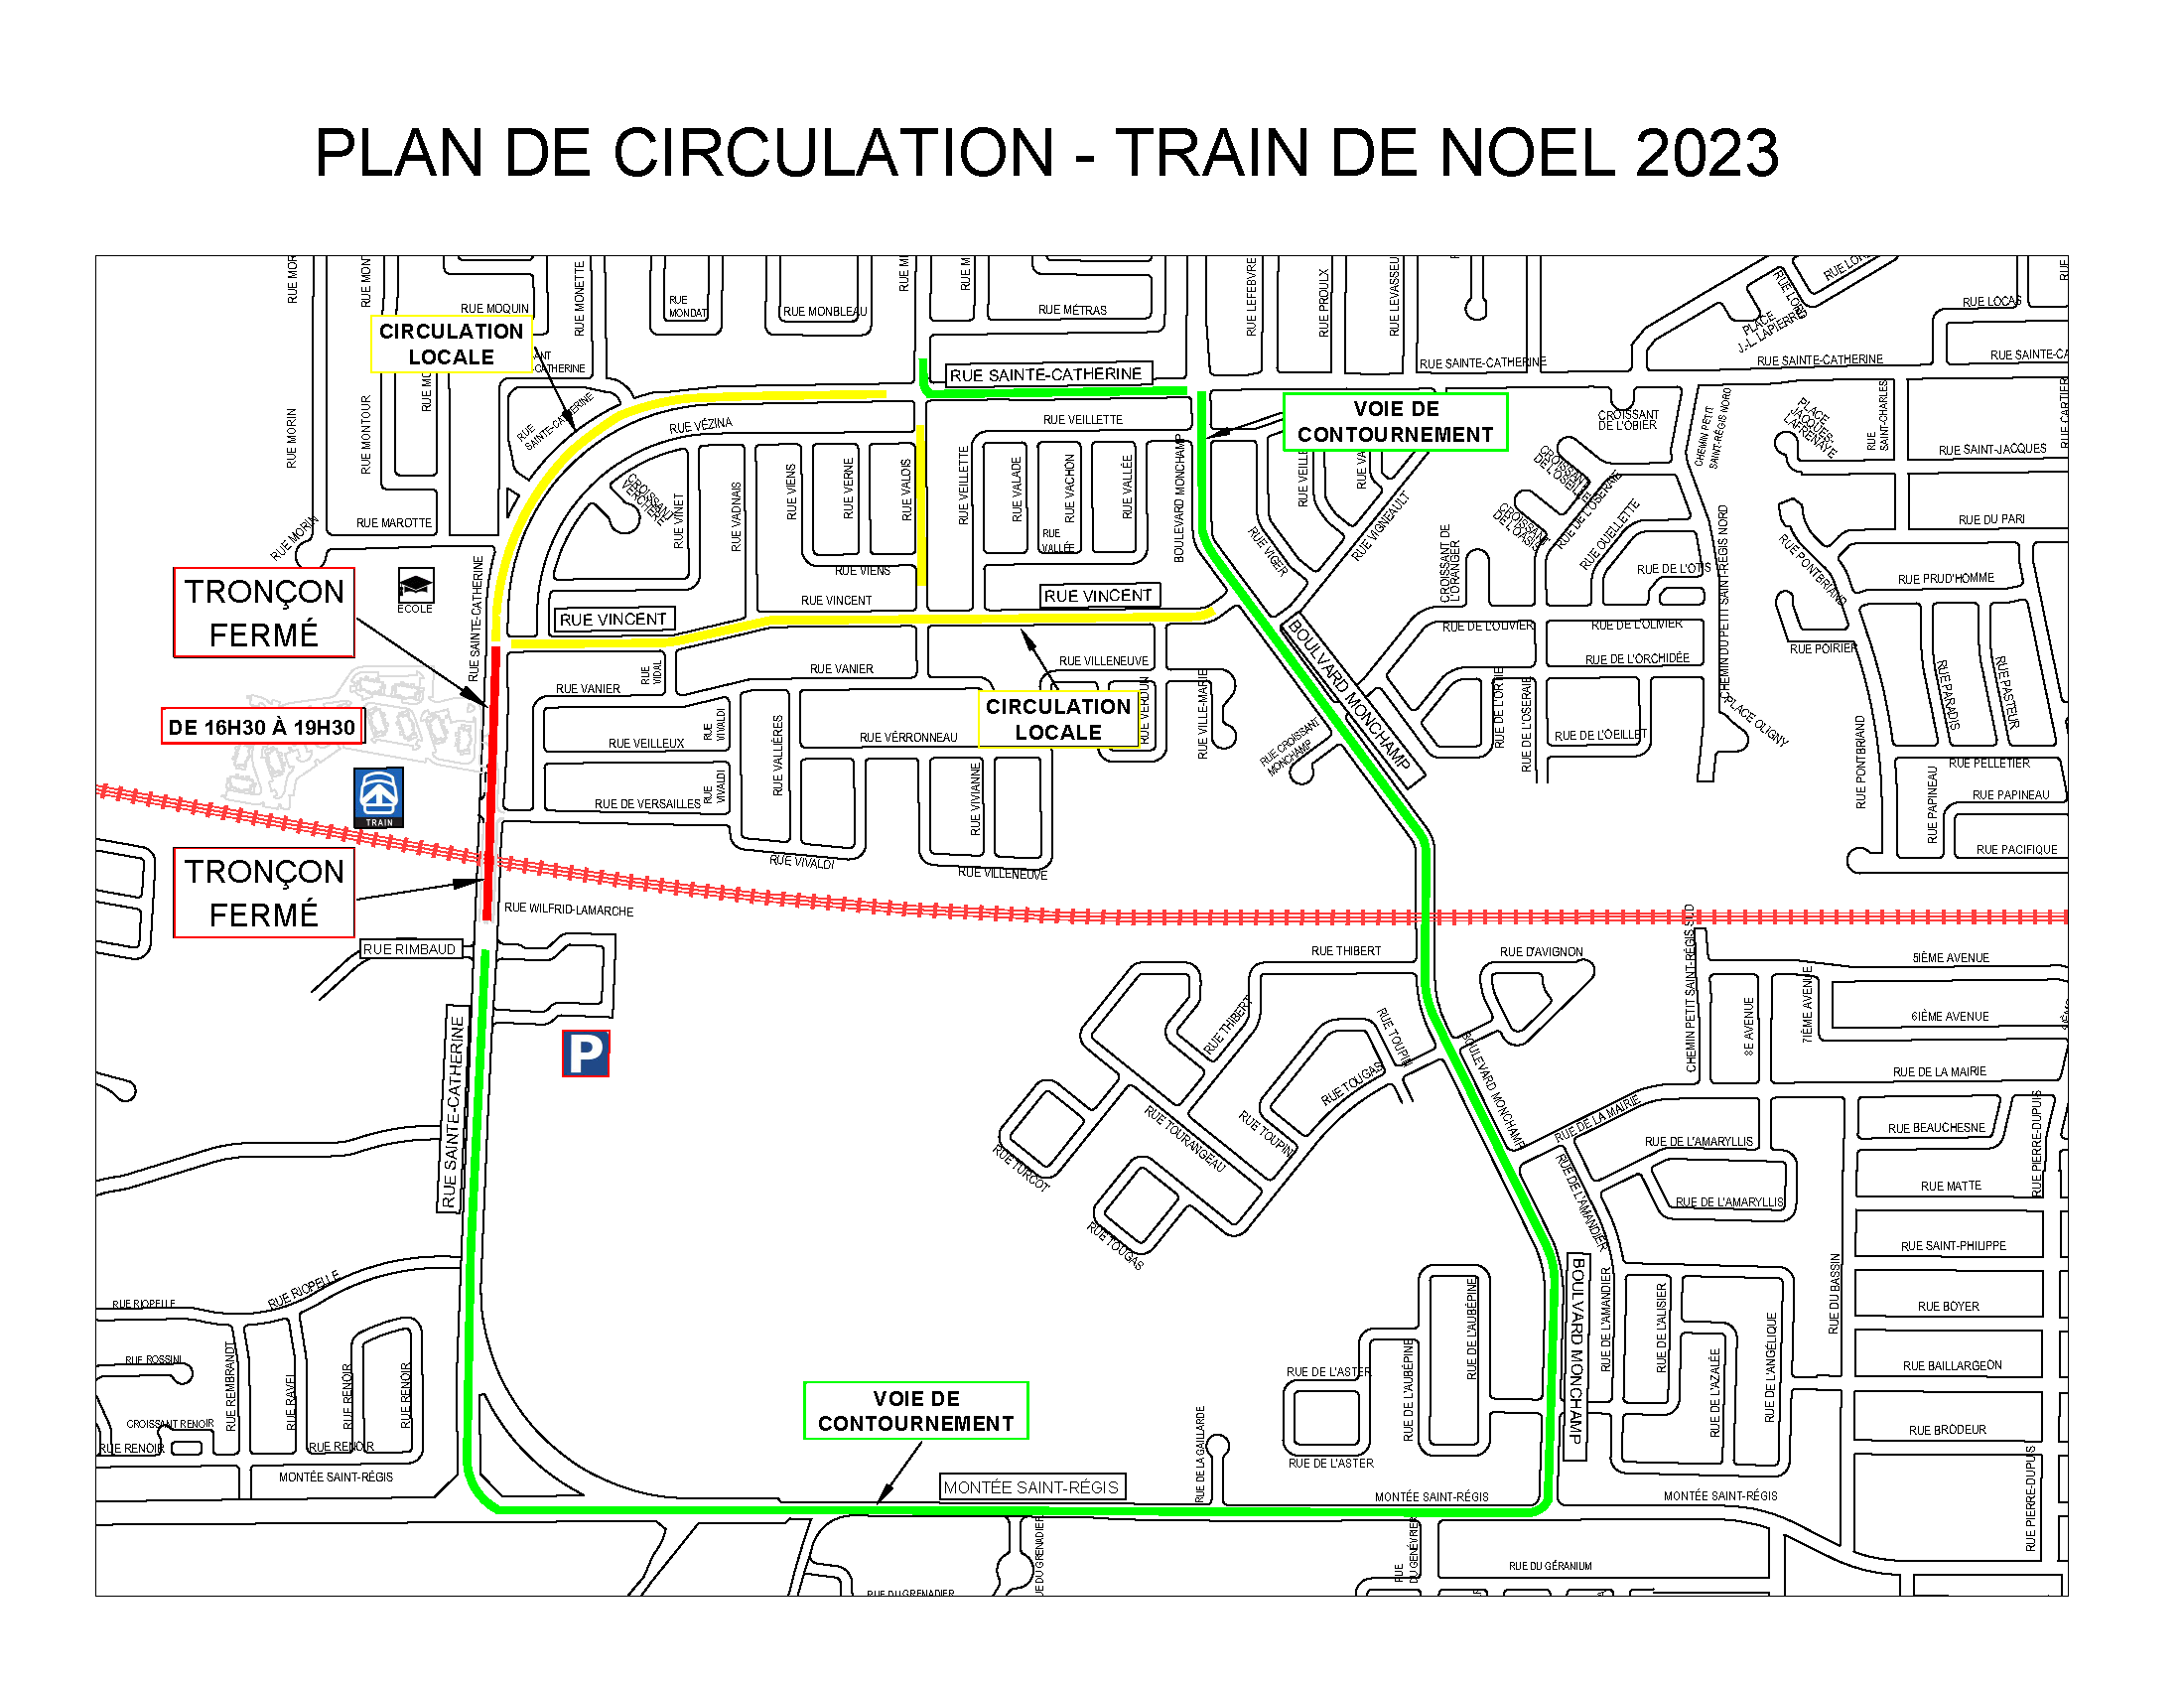 Plan_circulation_train_fetes_2023.png (129 KB)